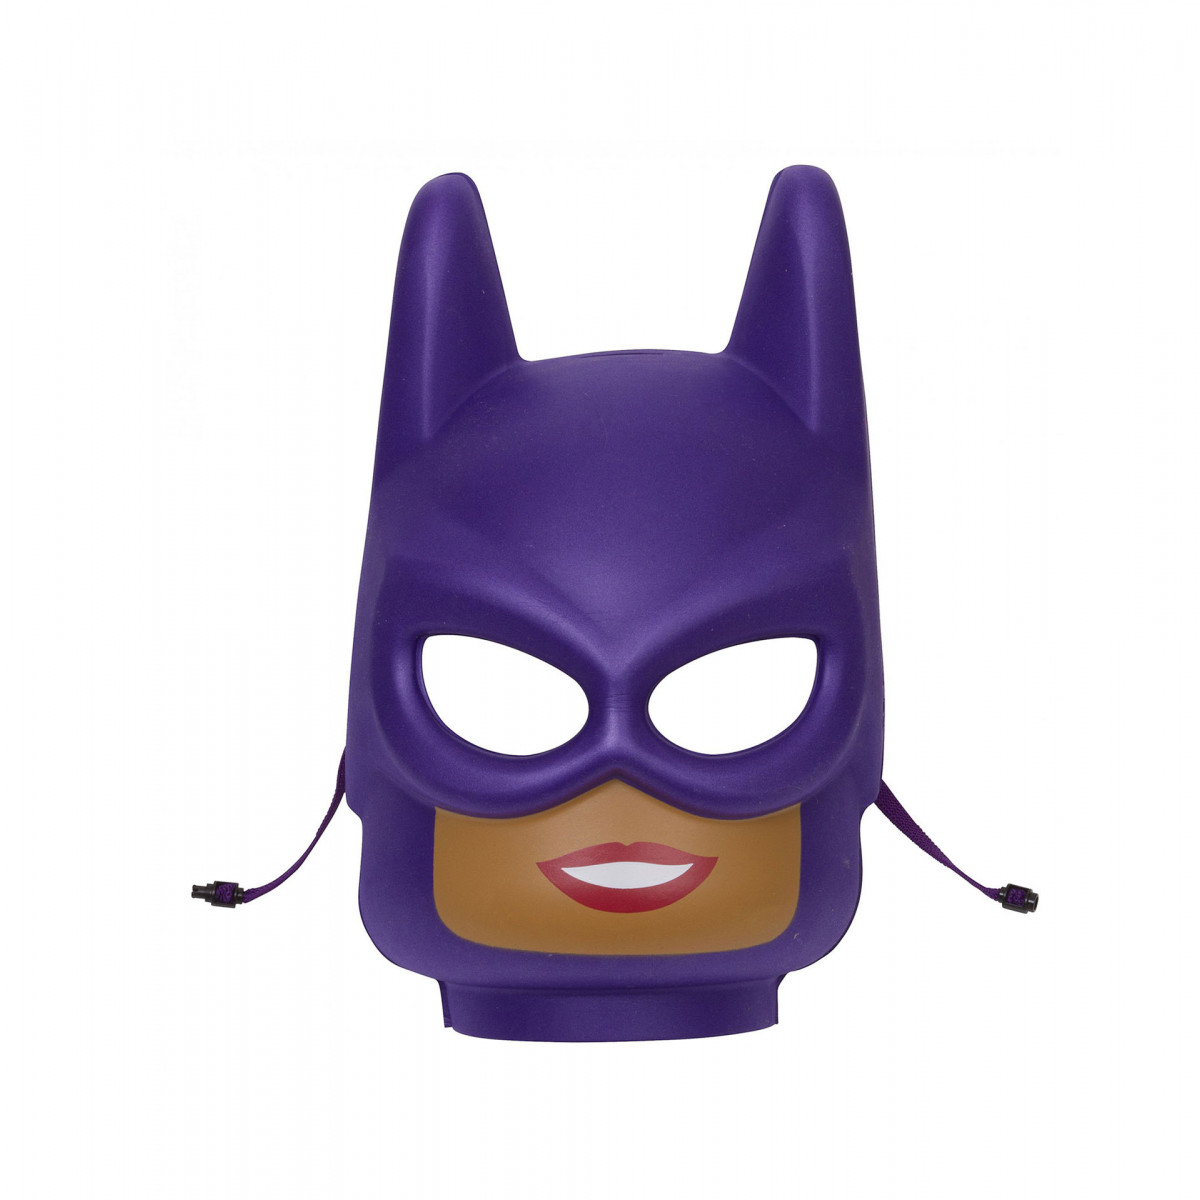 Lego 853645 - Batgirl mask The Batman Movie